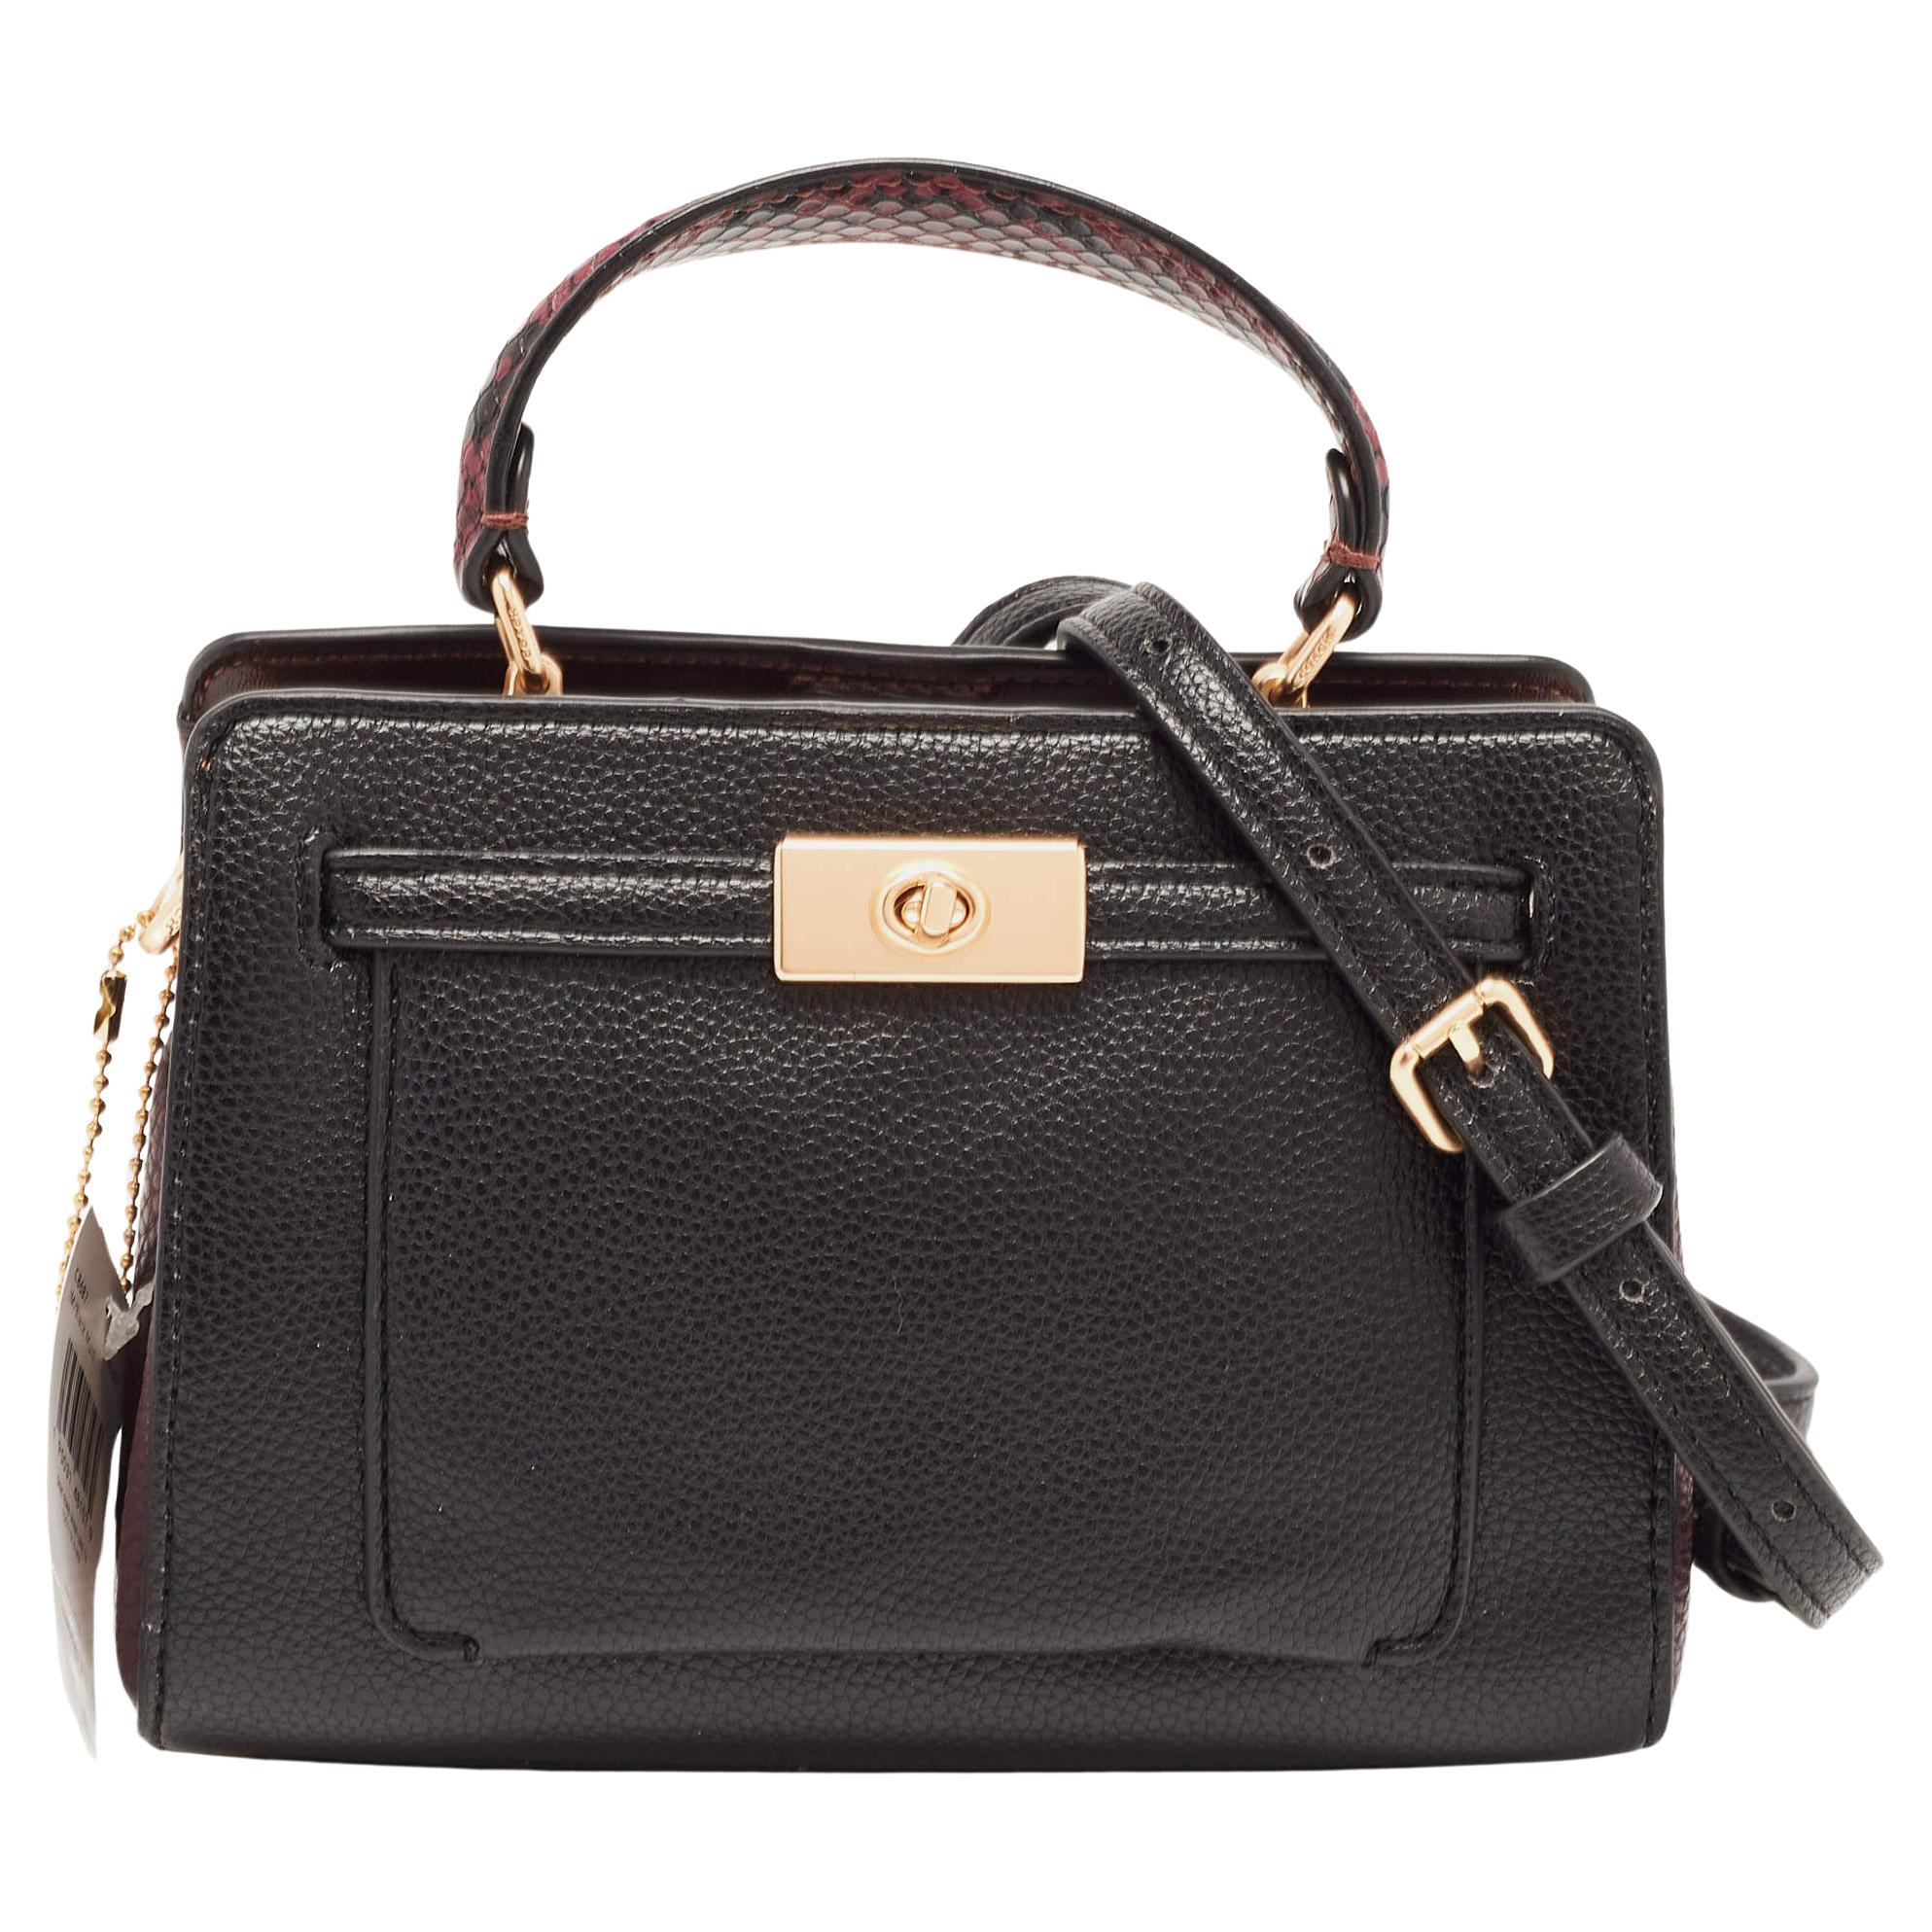 Coach Black/Burgundy Leather Mini Lane Top Handle Bag